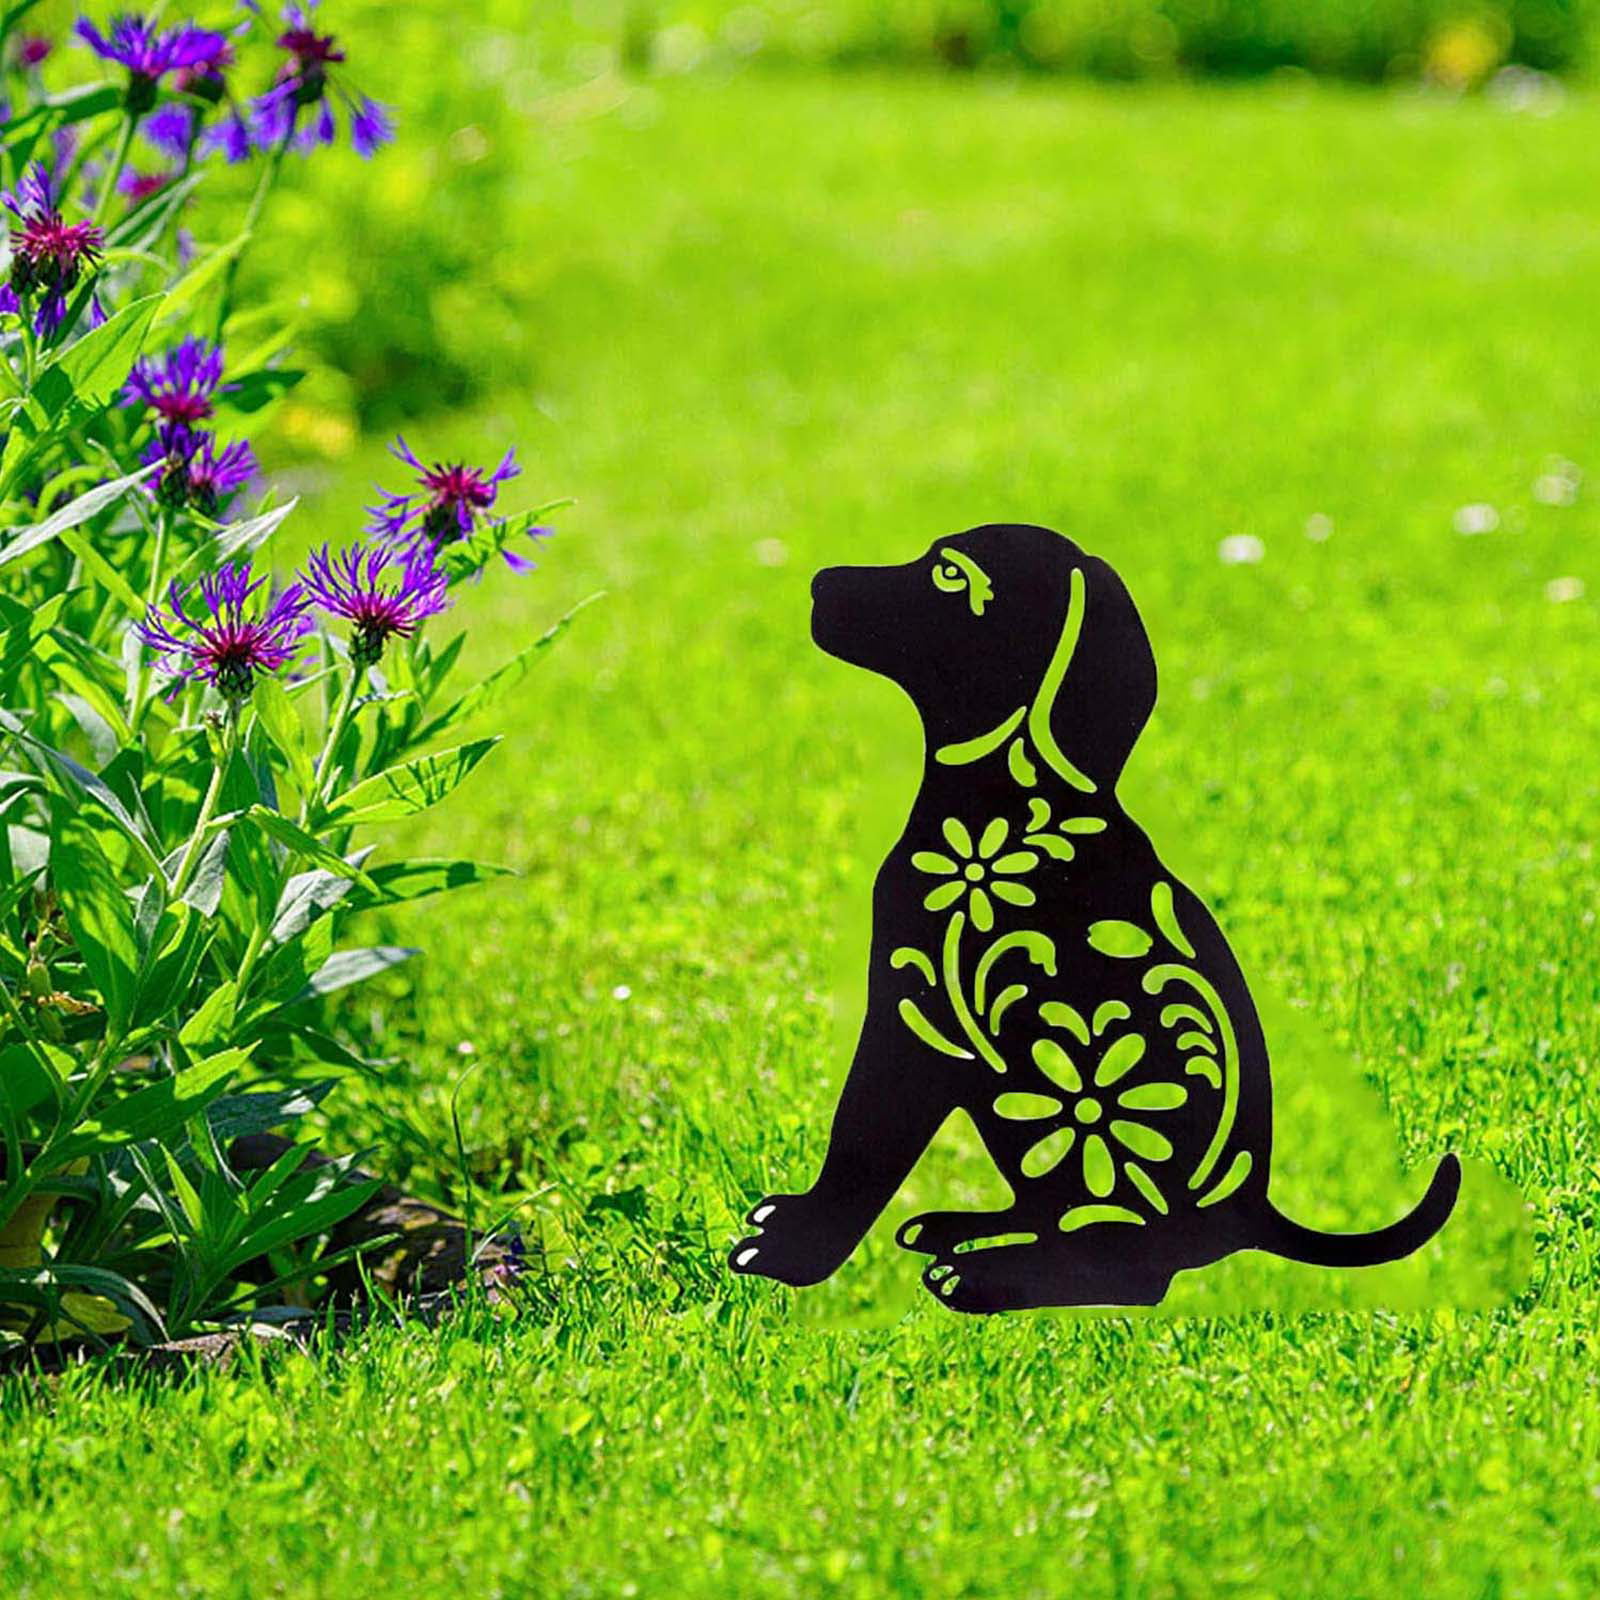 2pcs Outdoor Decoration Dog Stake Garden Lawn Ornaments Yard Decor Acrylic Black